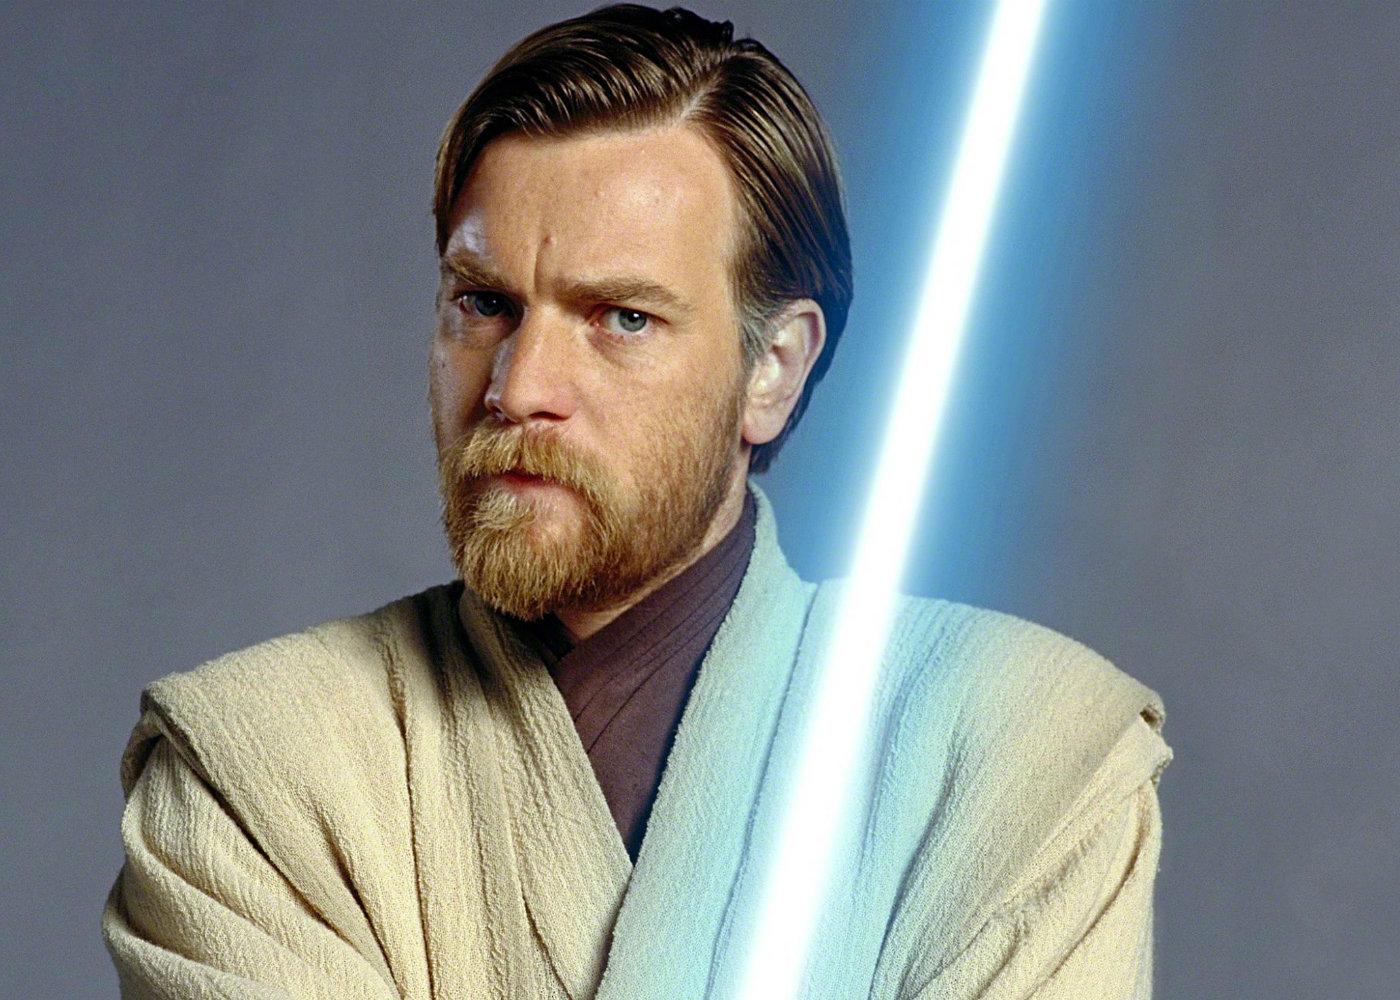 Rumor: Ewan McGregor is Reprising Obi-Wan for Star Wars Episode IX